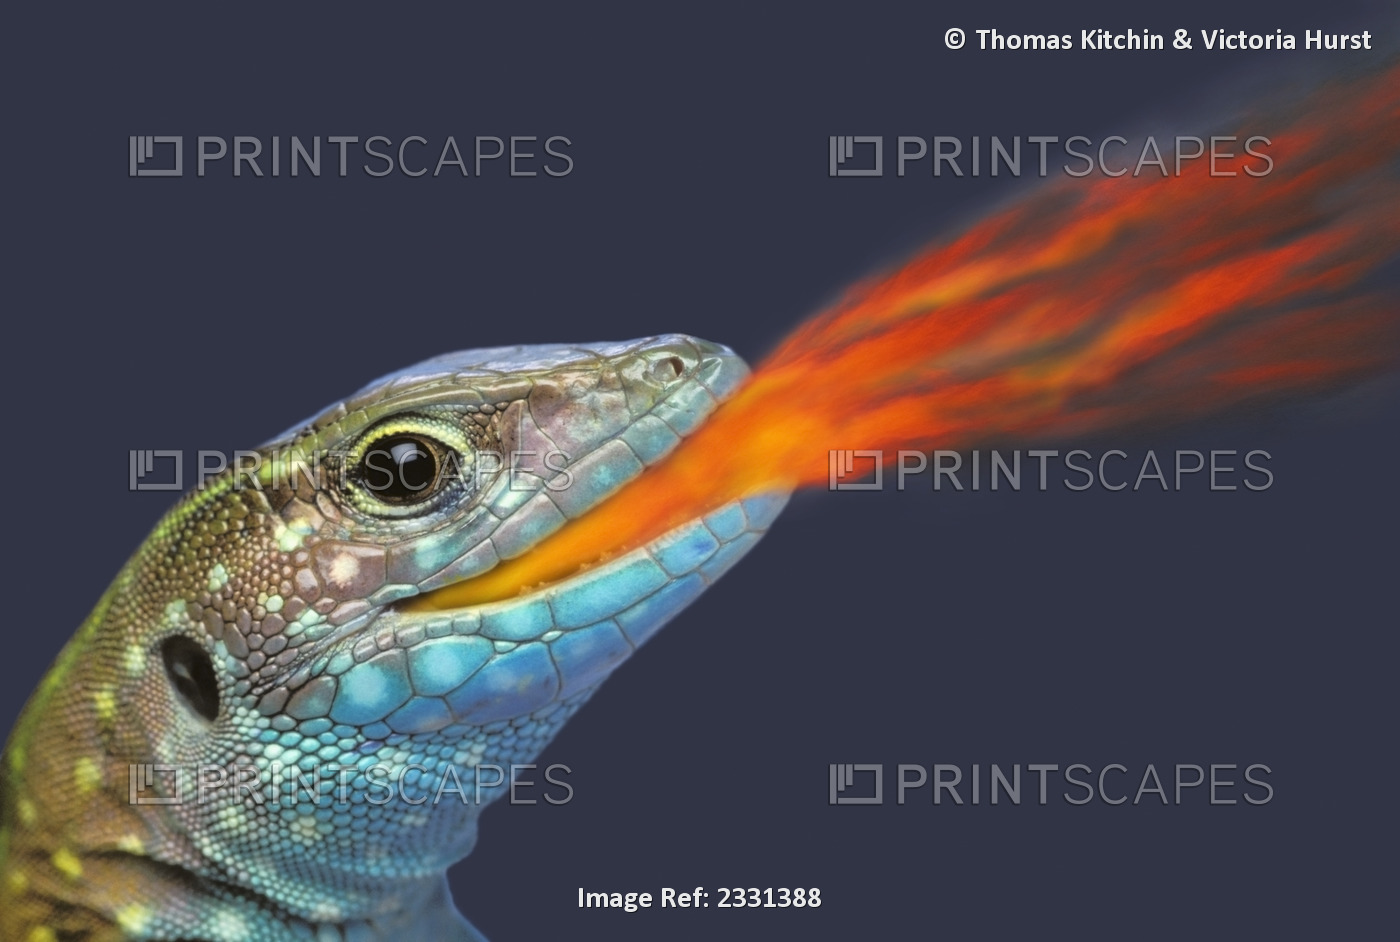 Fire-breathing rainbow lizard;British columbia canada